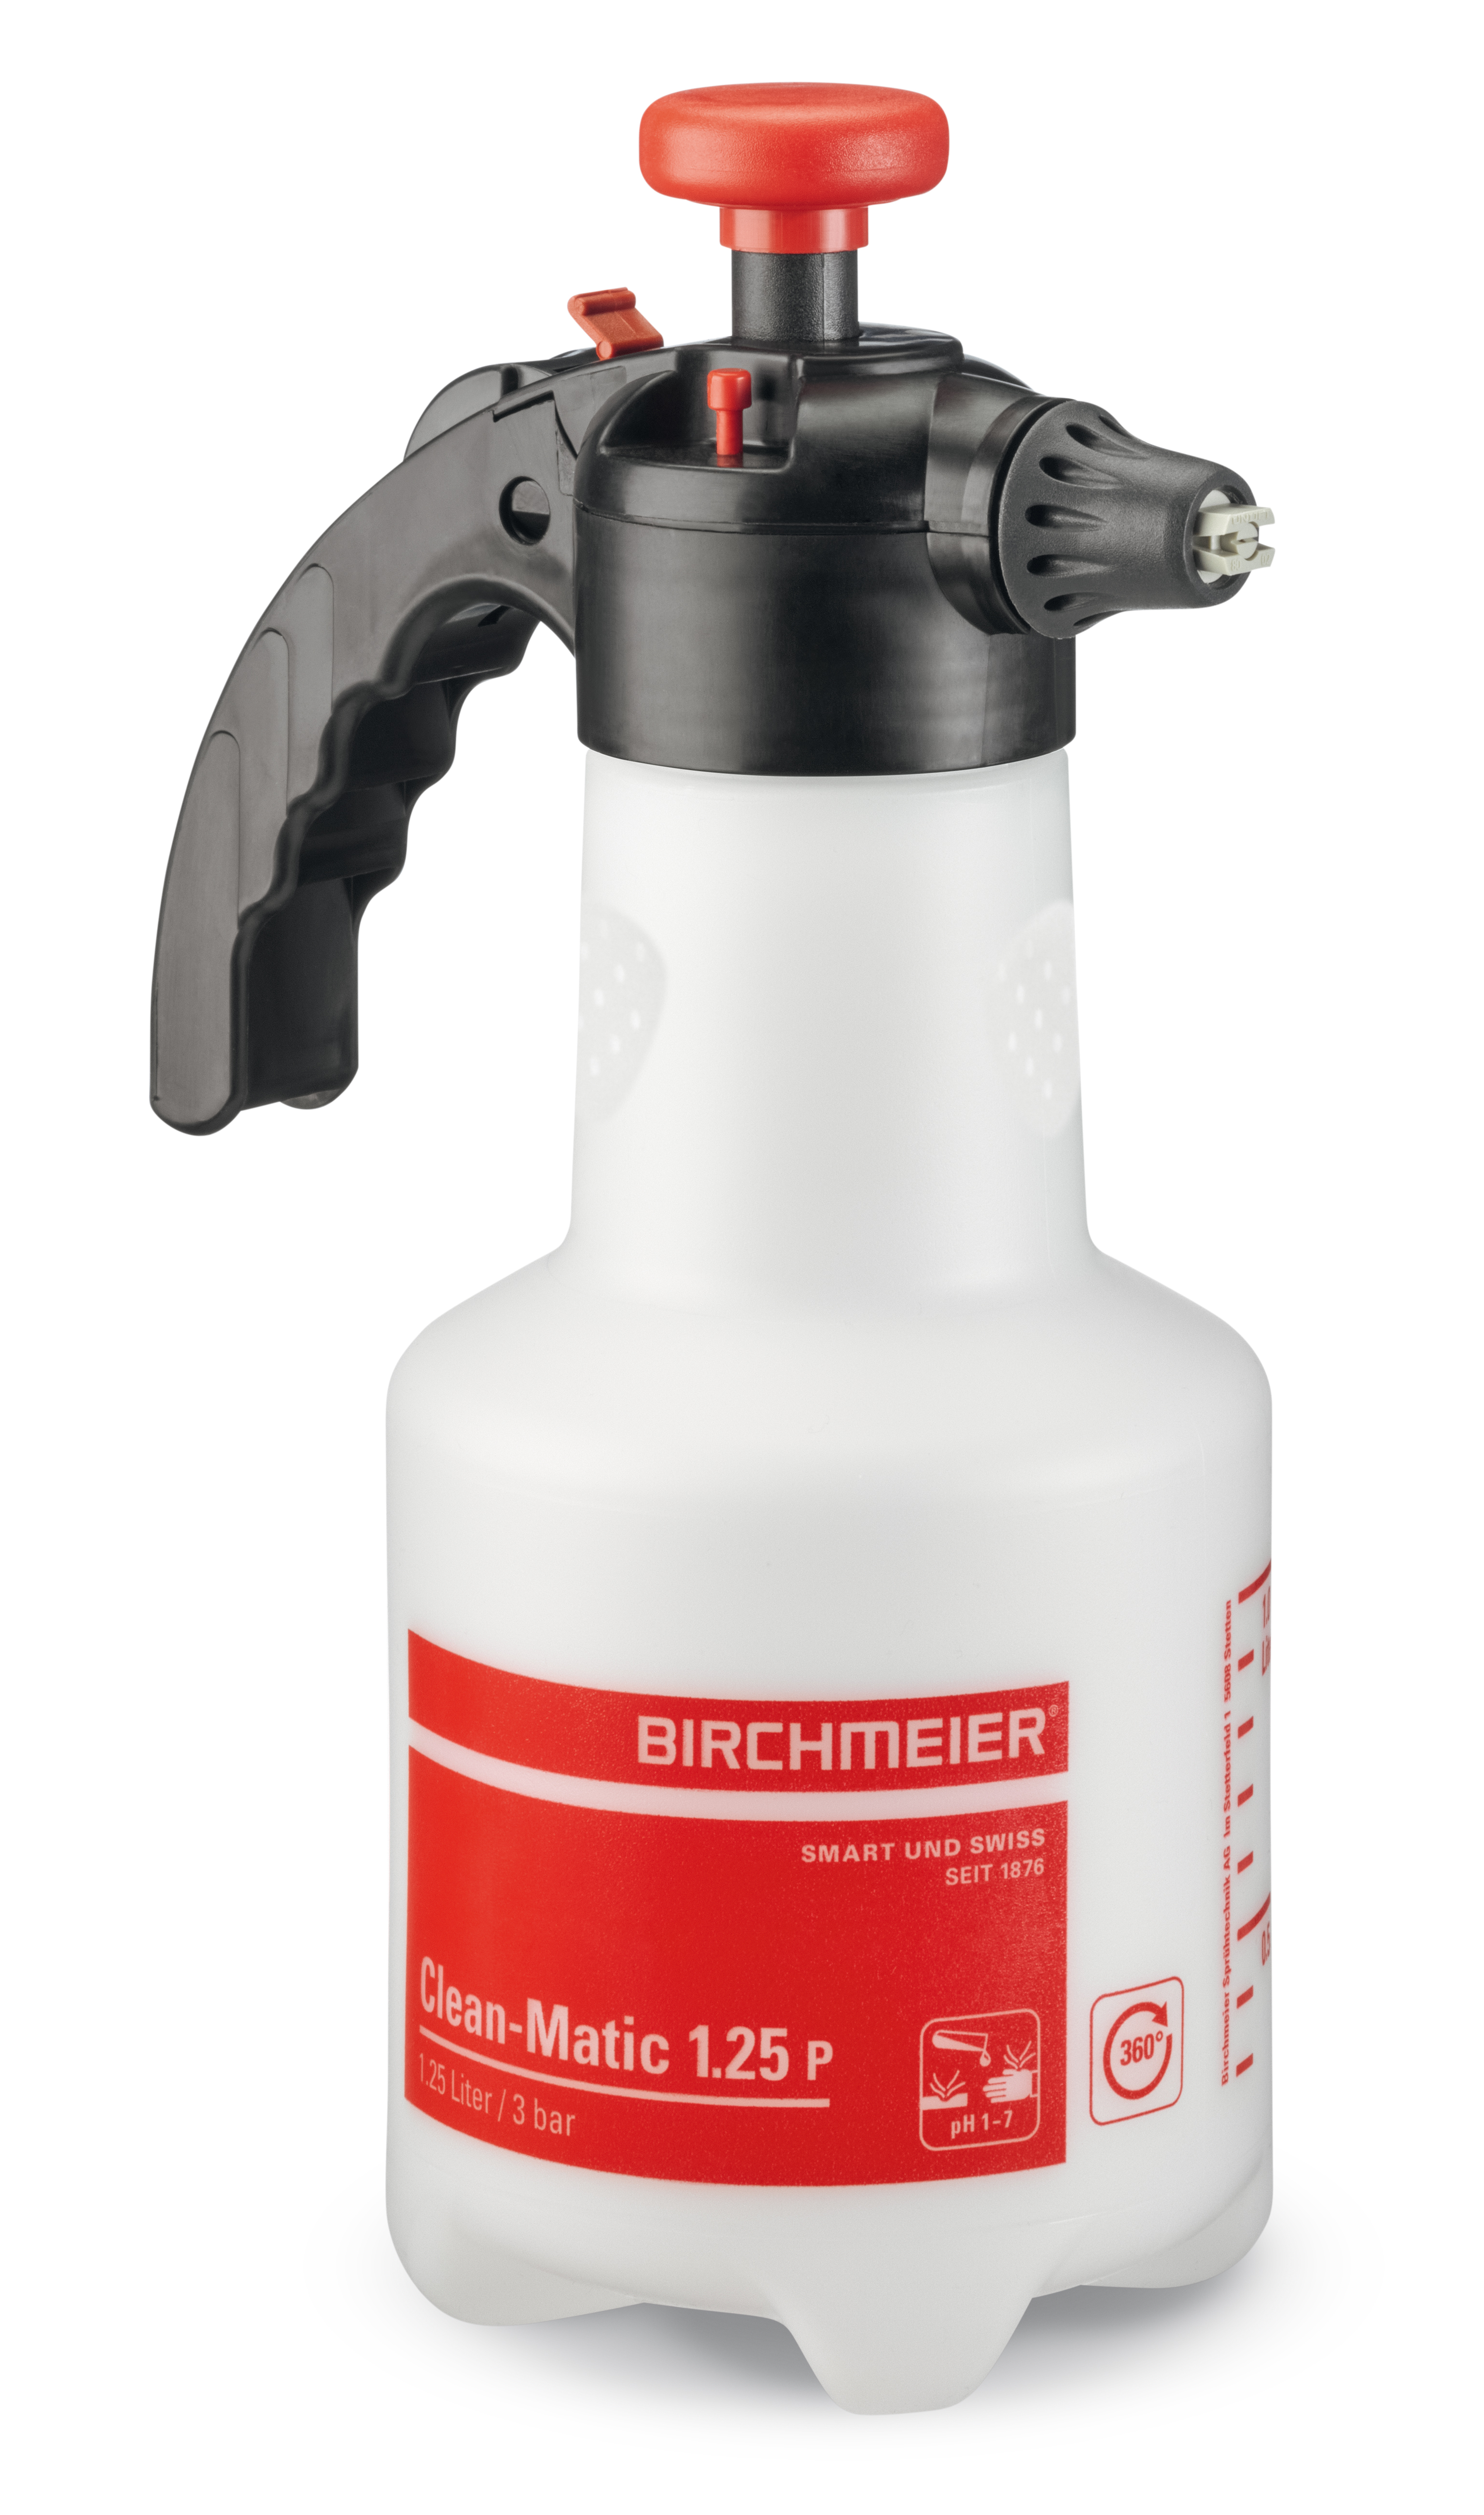 Birchmeier - Clean-Matic 1.25 P / 360° Sprühgerät